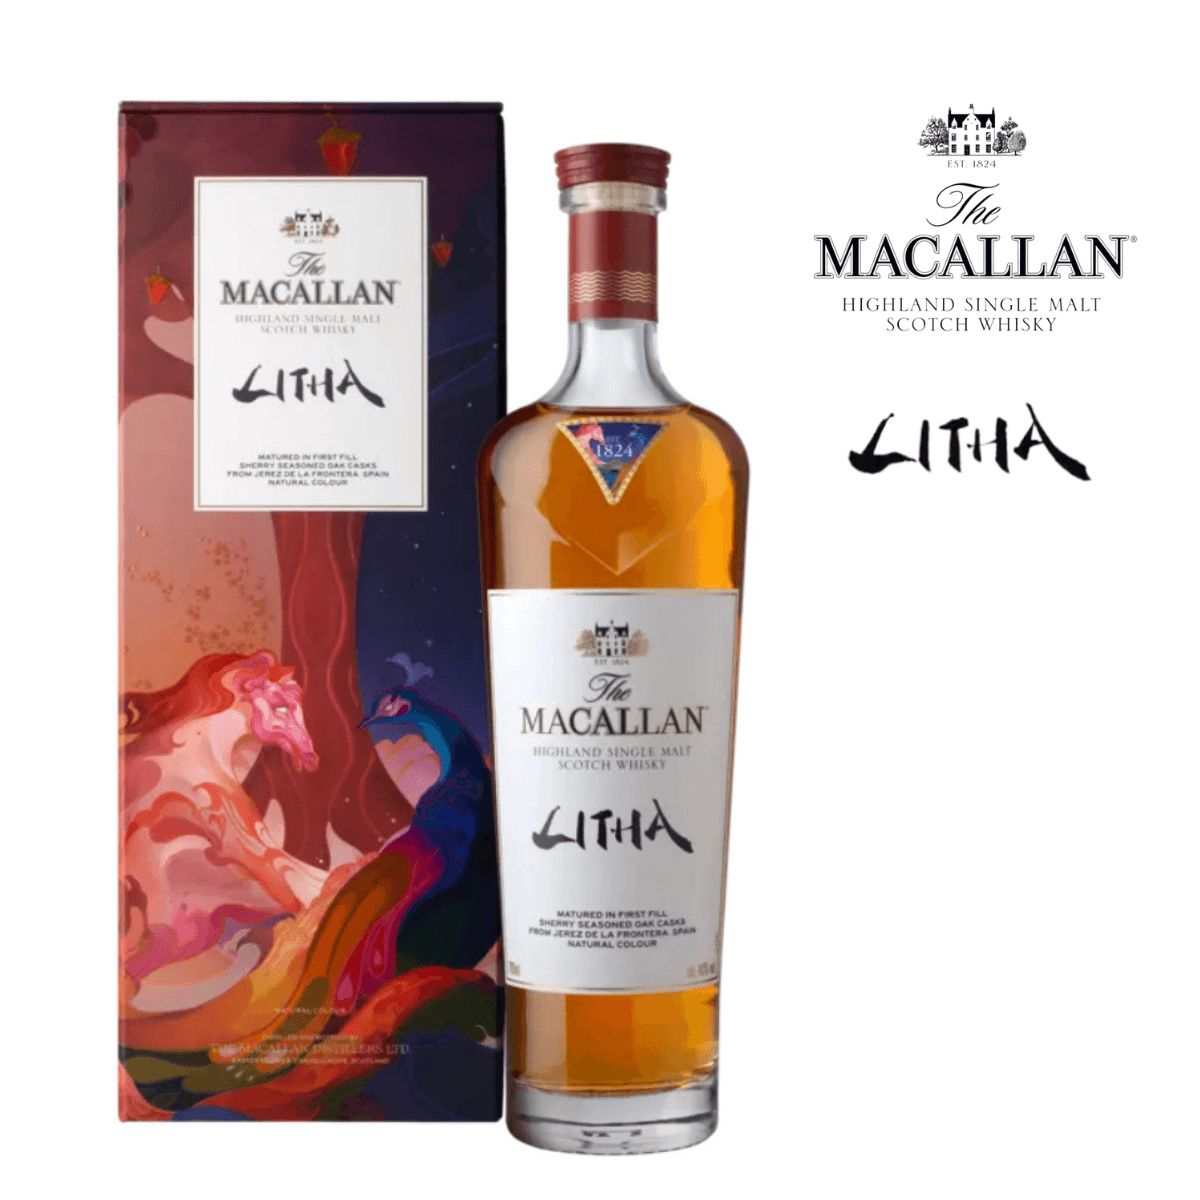 Macallan Litha Highland single malt Whisky